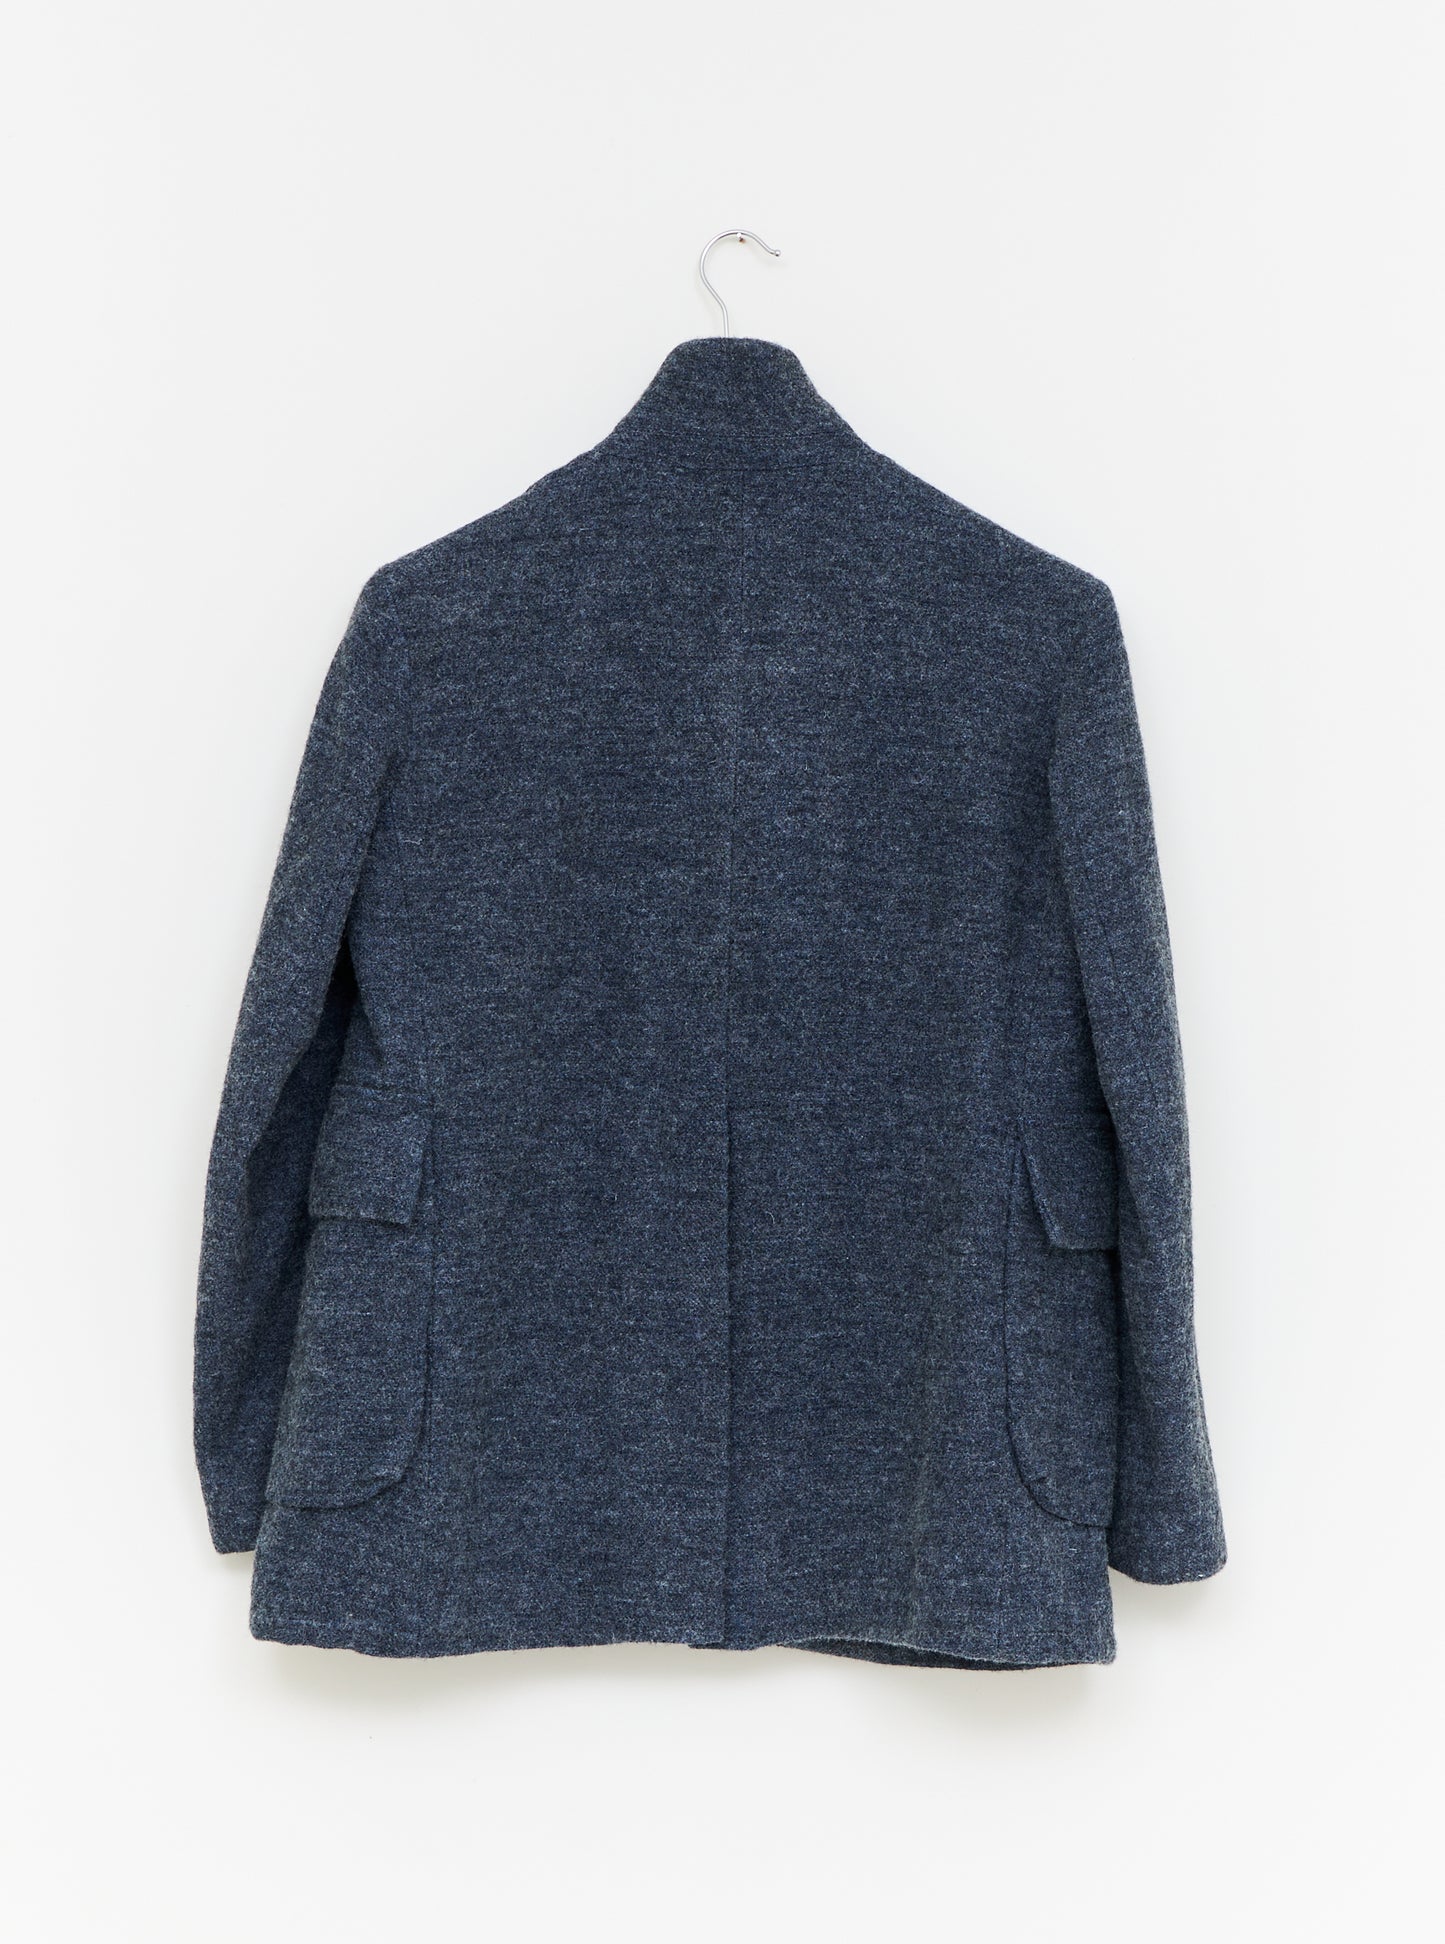 5 Pocket Jacket - Indigo Wool & Cotton